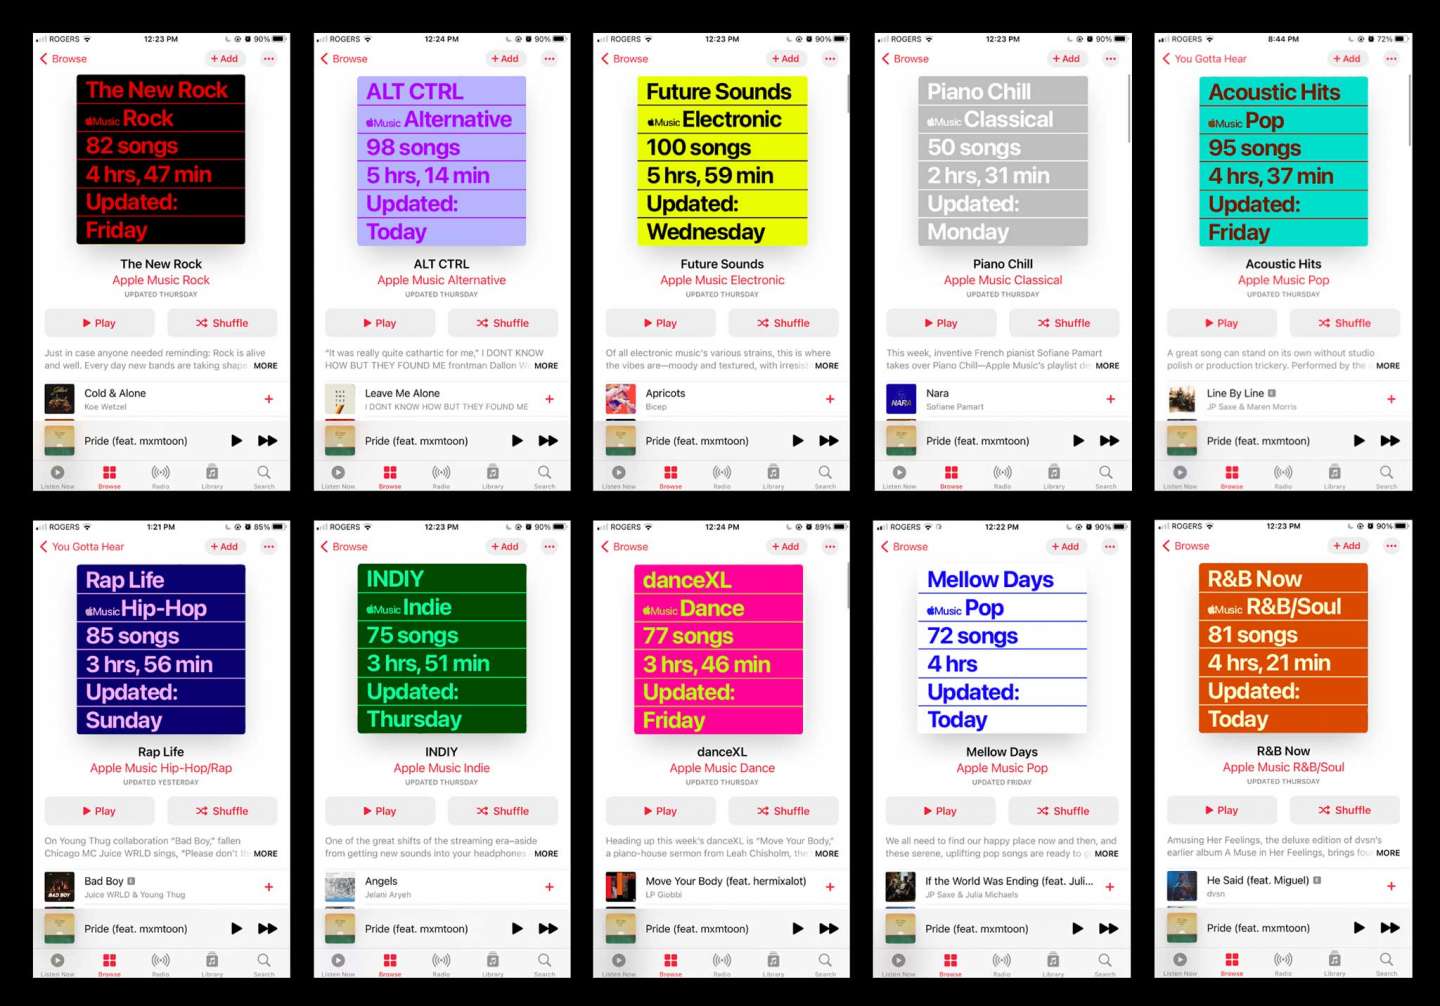 Apple Music Branded Playlists